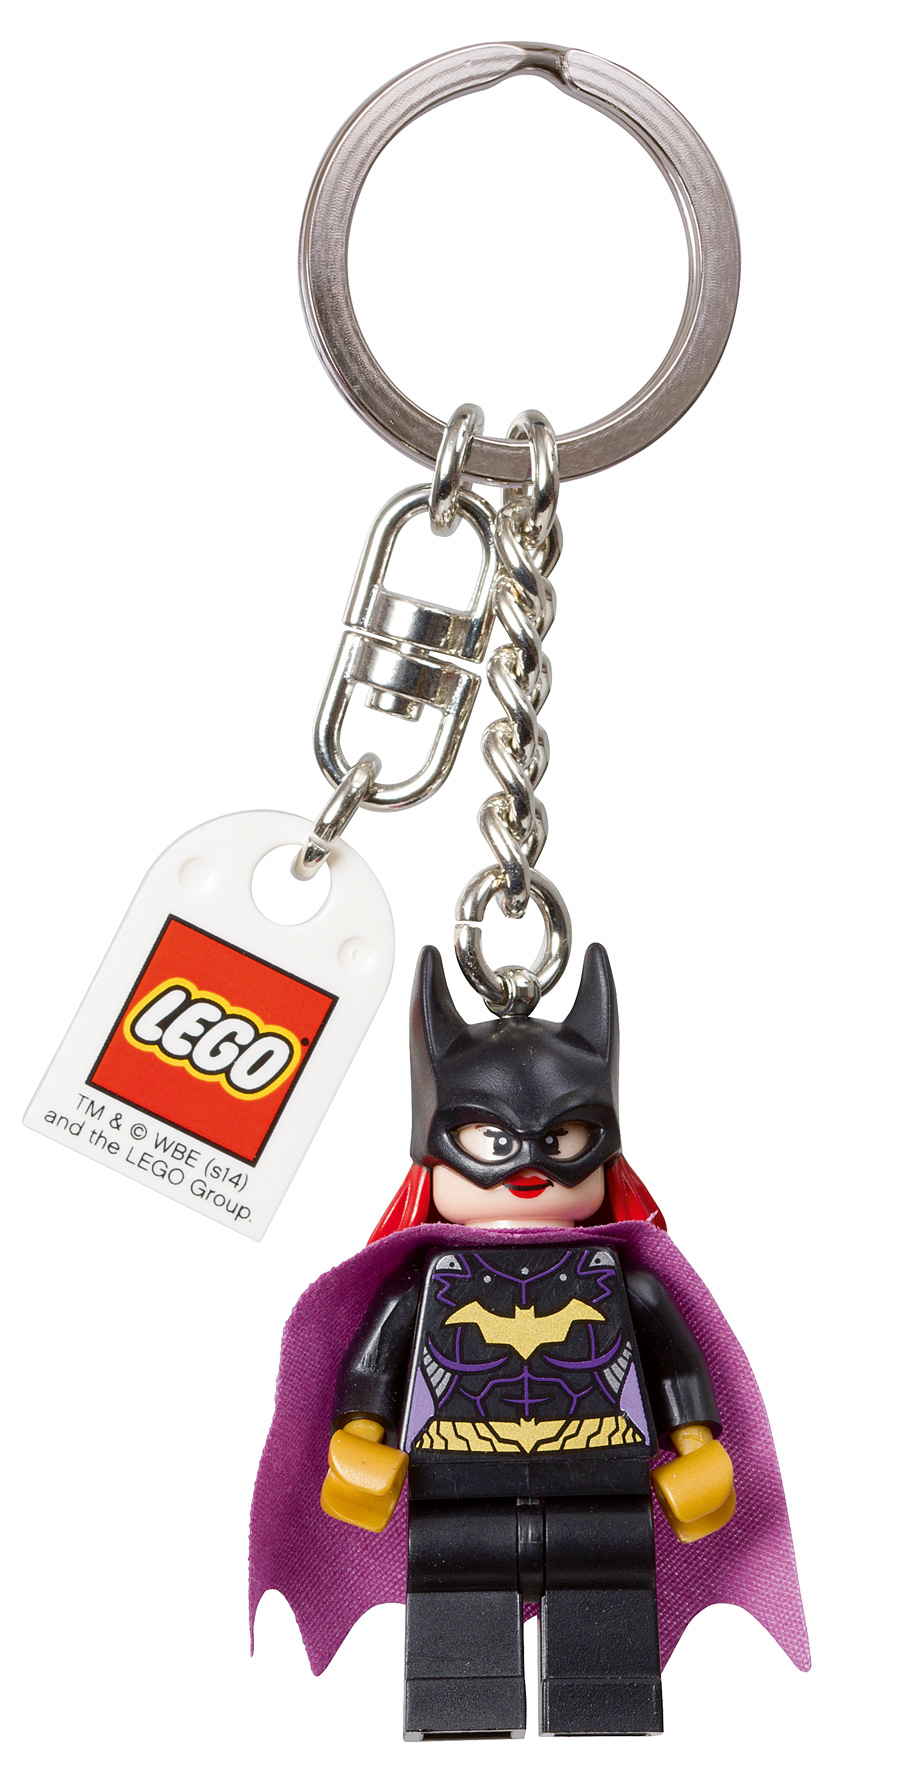 Lego Batman 3 pre-order Amazon Batgirl keychain